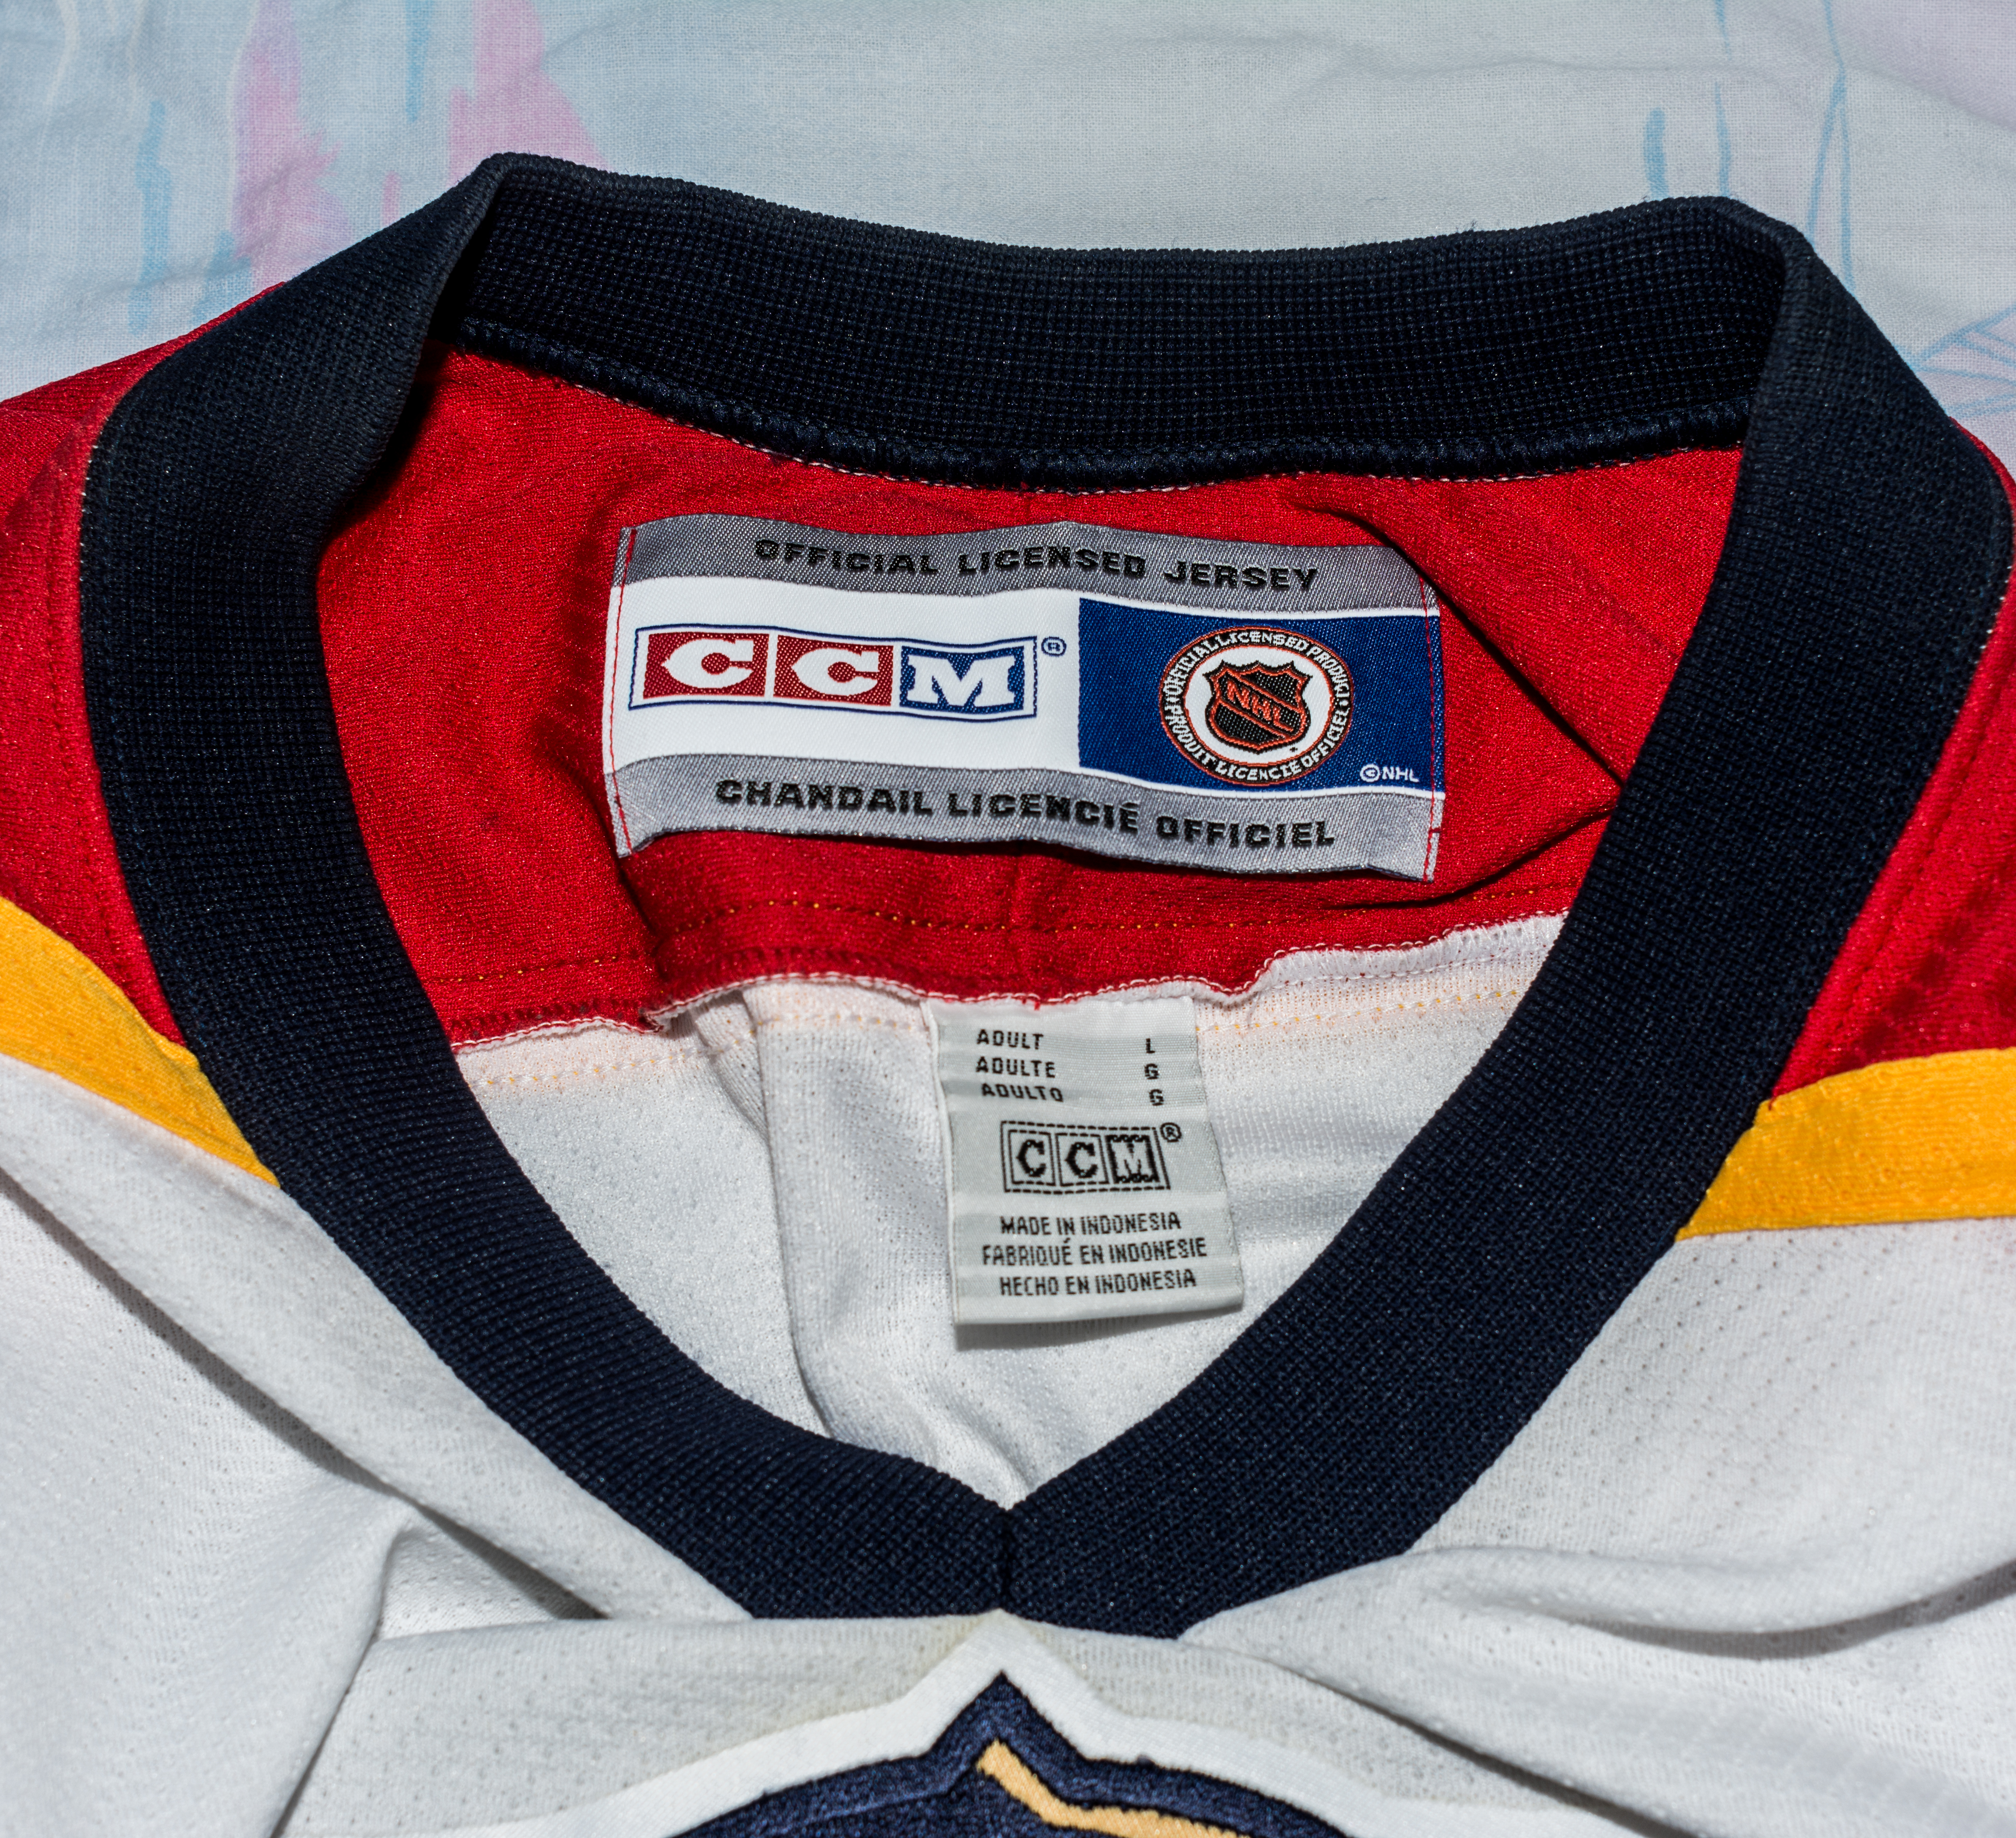 reebok jerseys made in indonesia